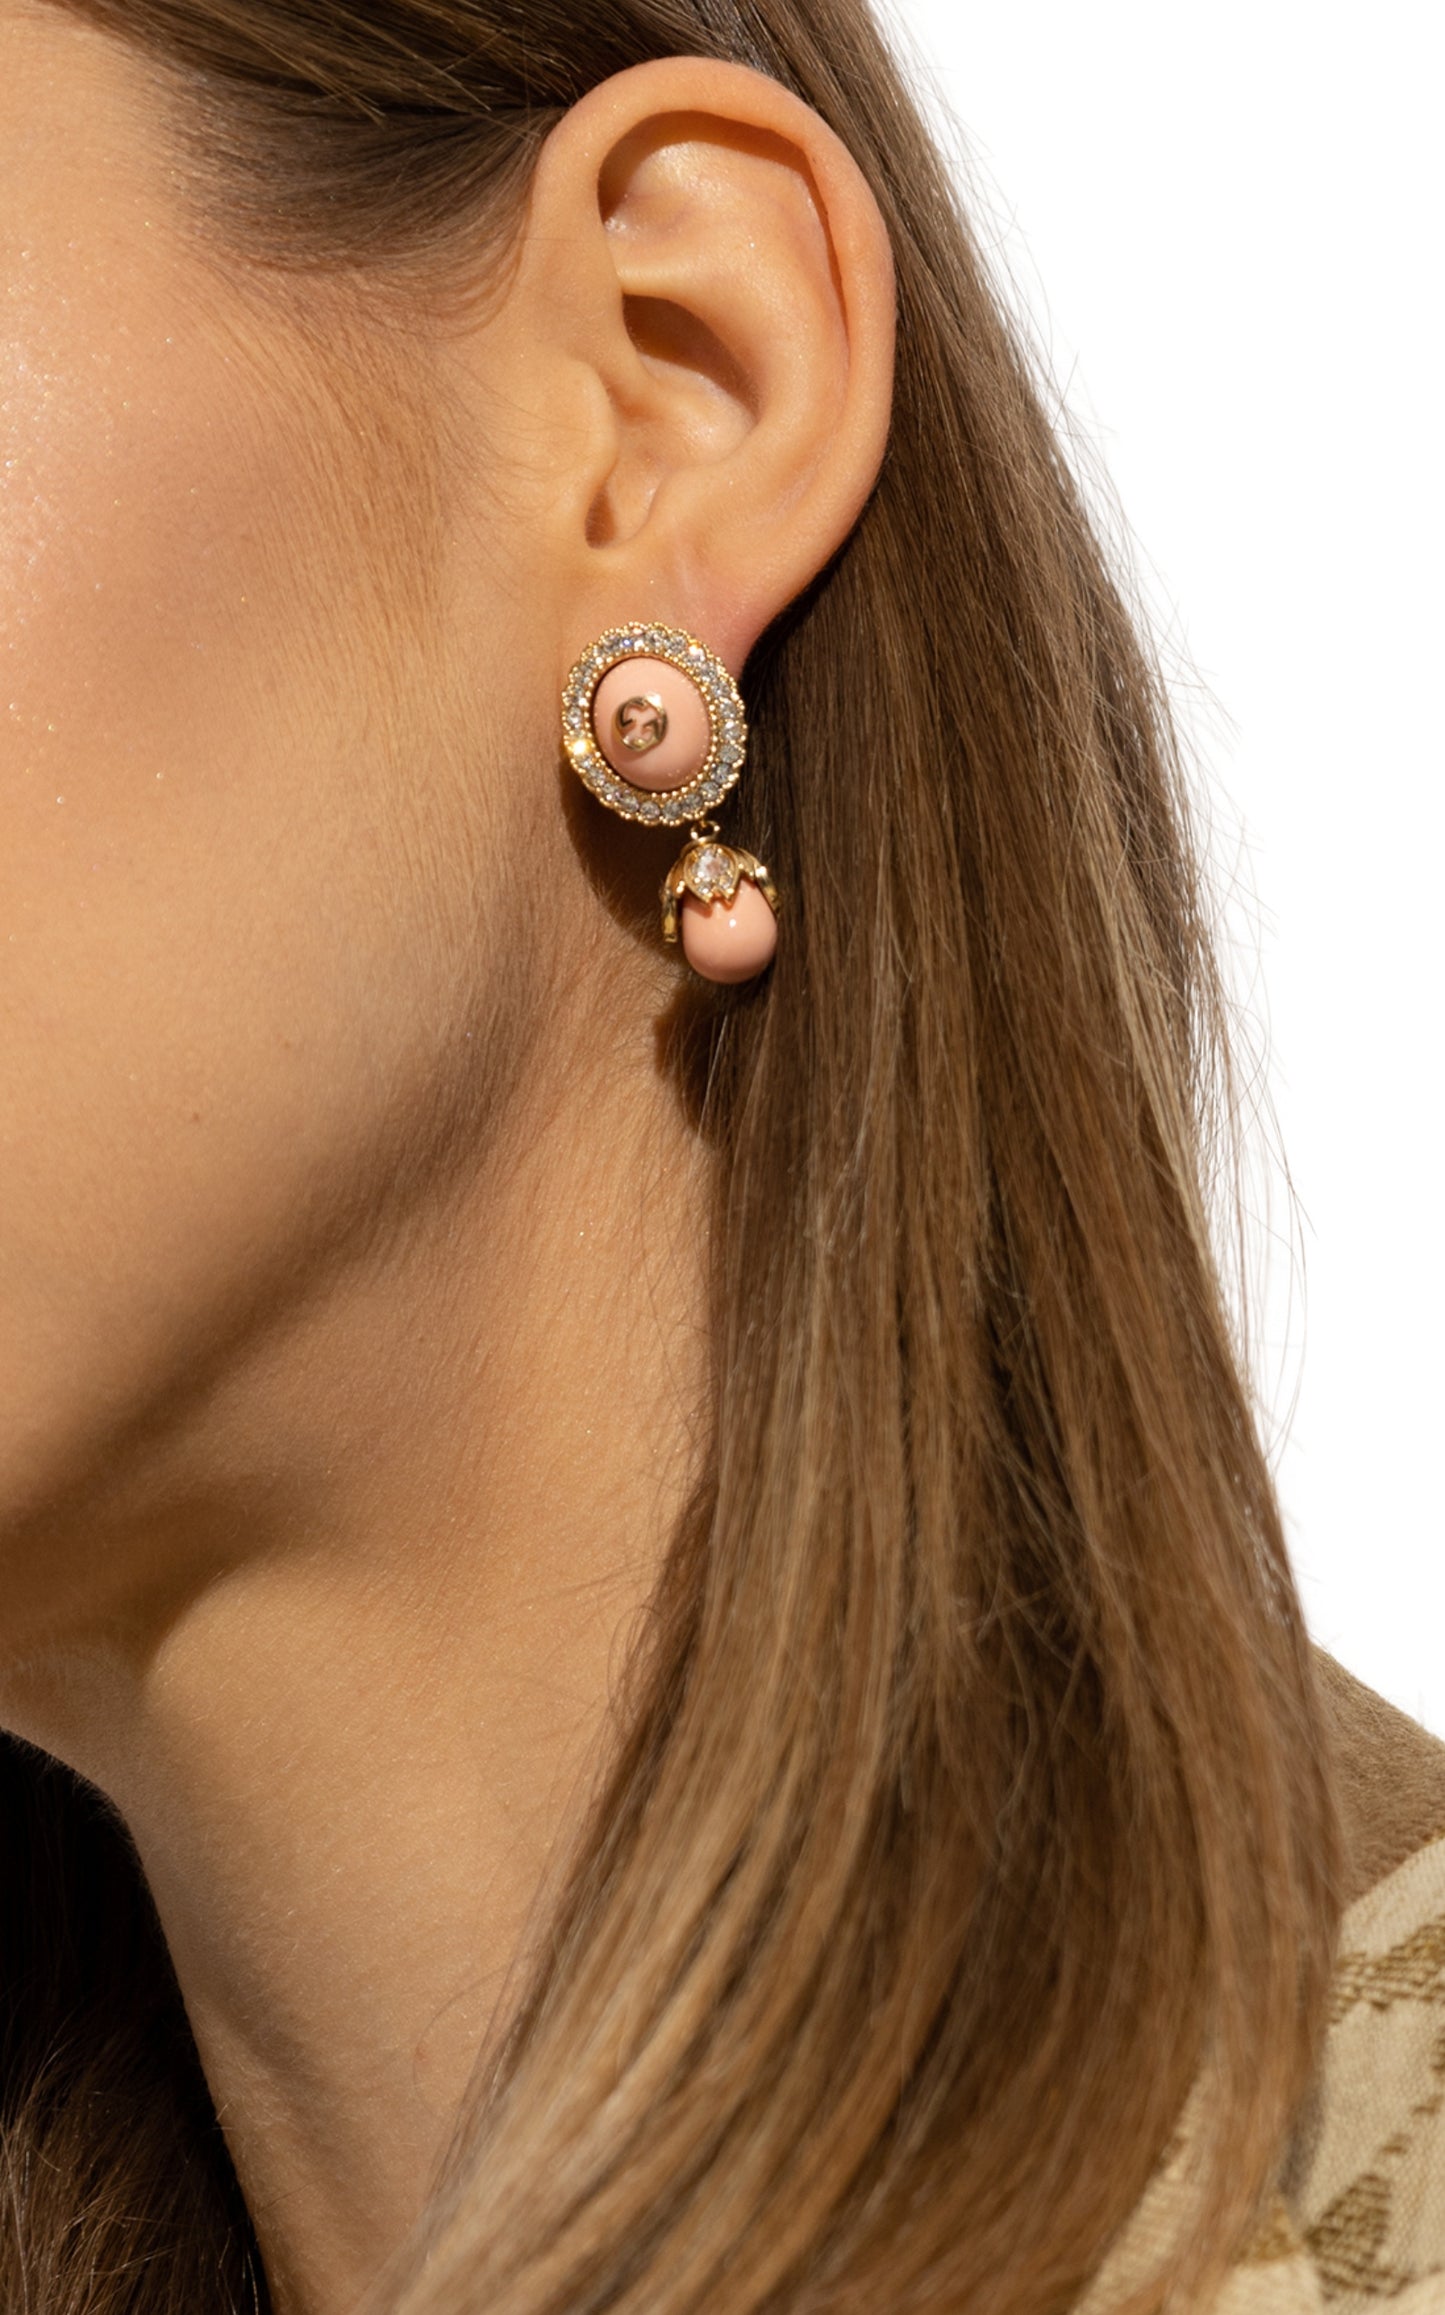 Interlocking G Pearl Earrings